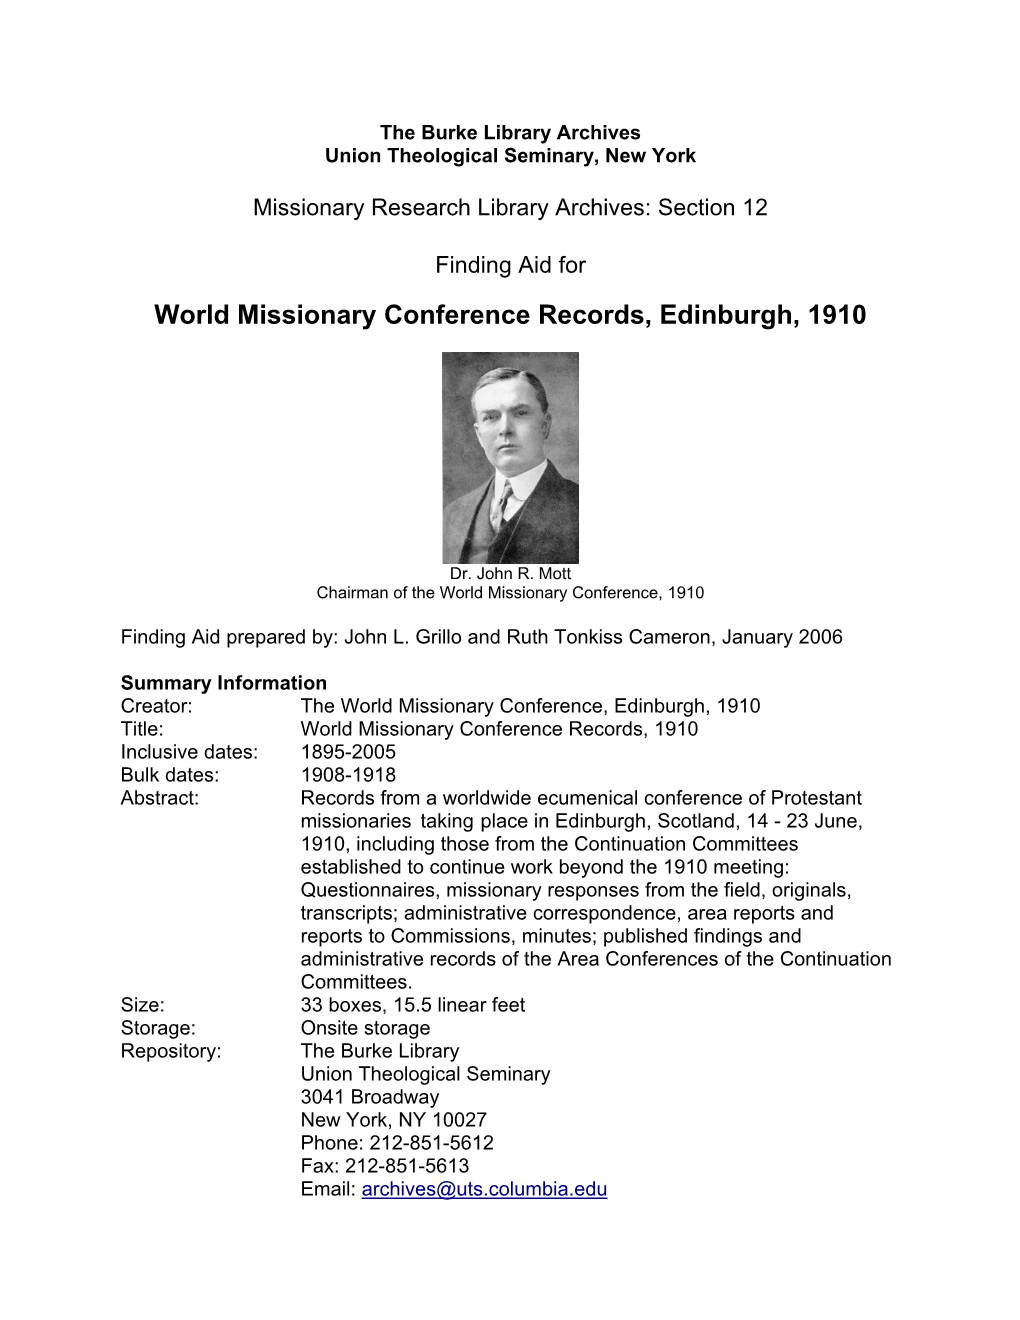 World Missionary Conference, Edinburgh, Scotland, 1910